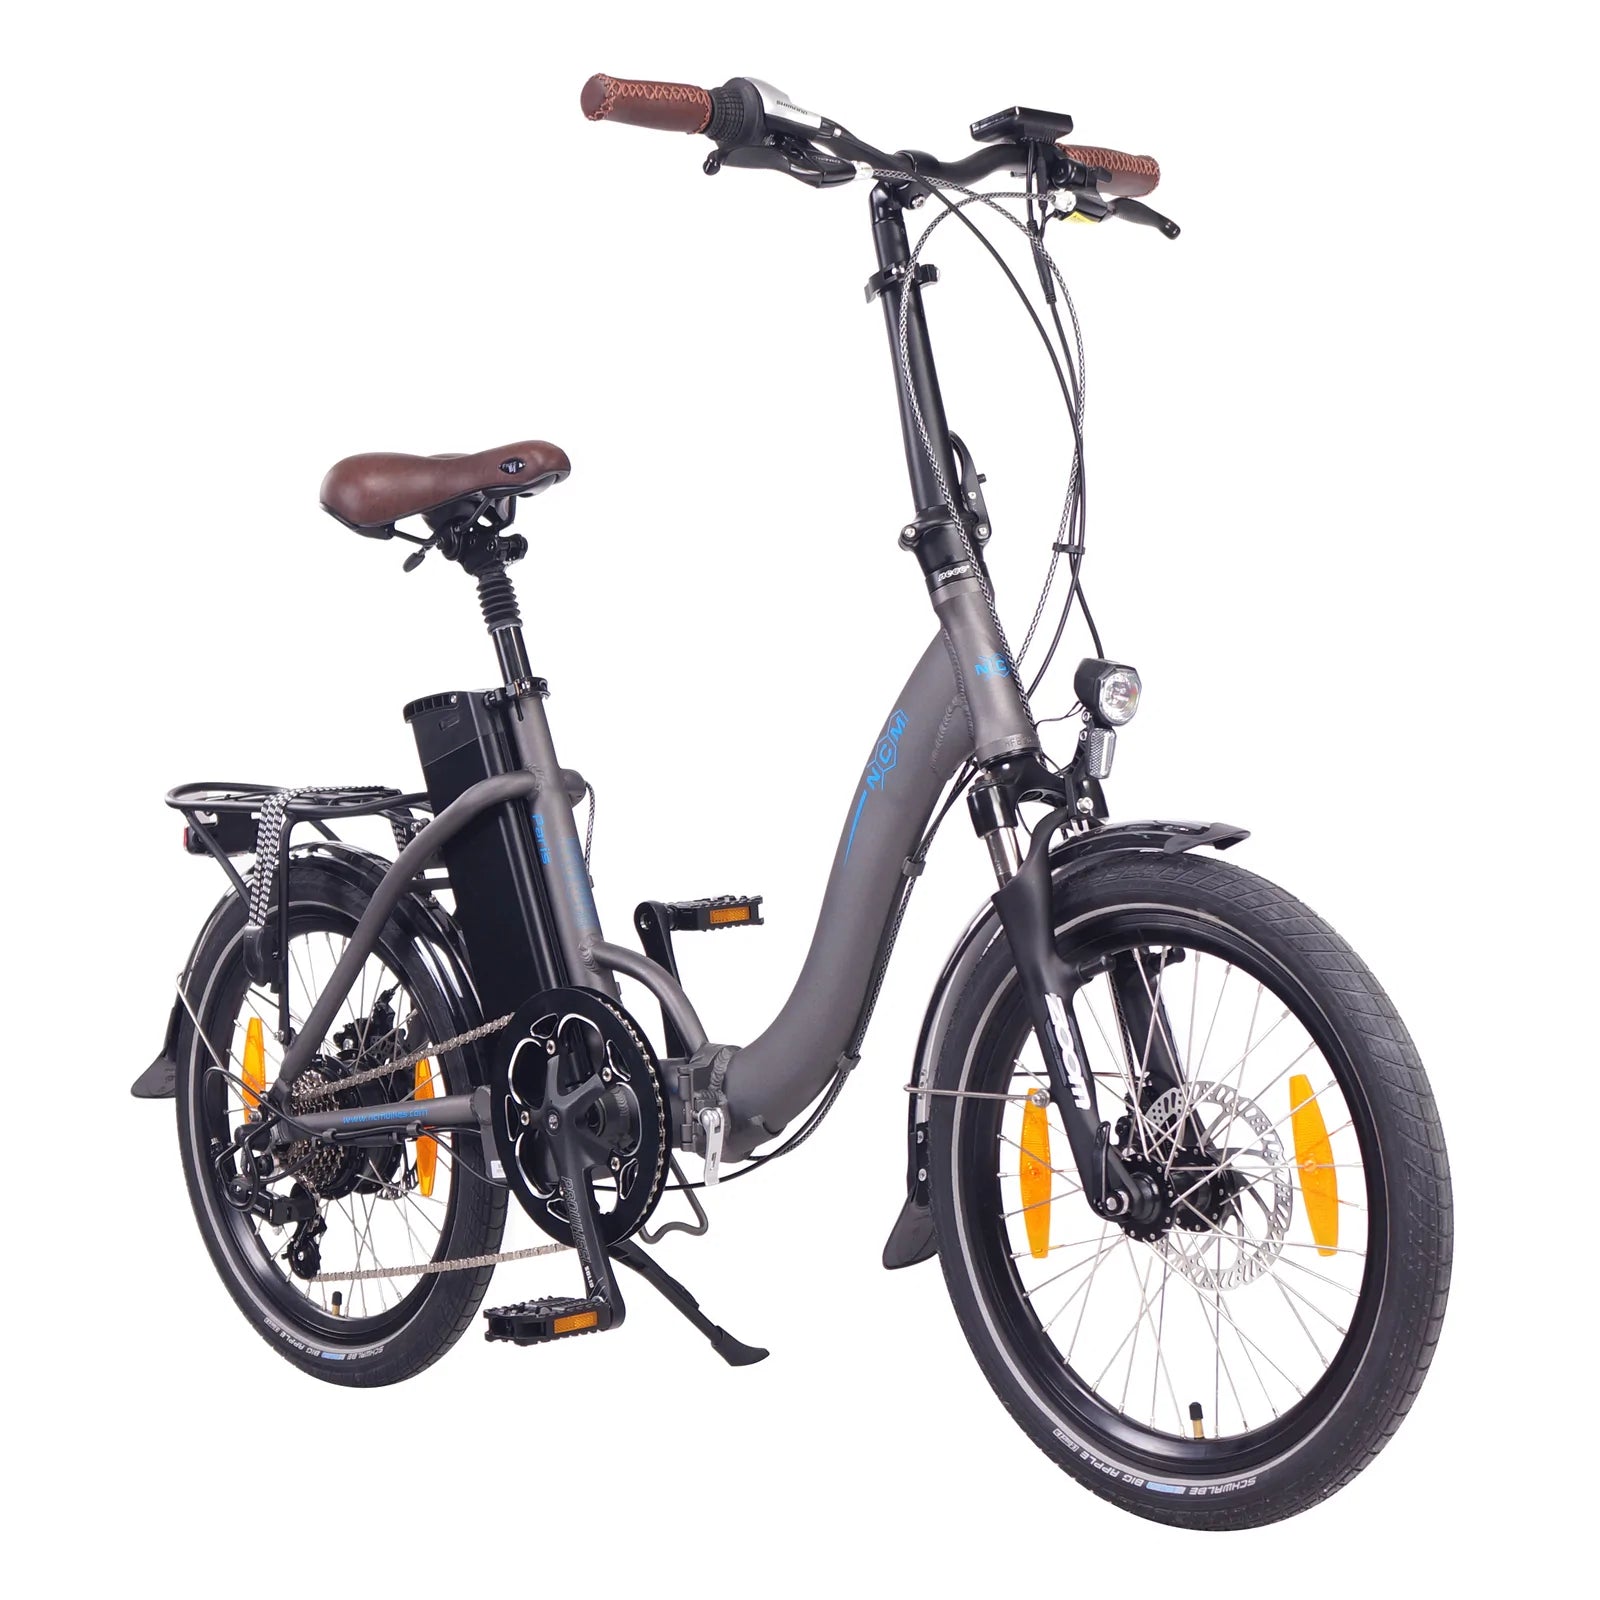 NCM Paris Folding E-Bike 250W 36V 15Ah 540Wh Battery Size 20 | Leon Cycle Ebikes